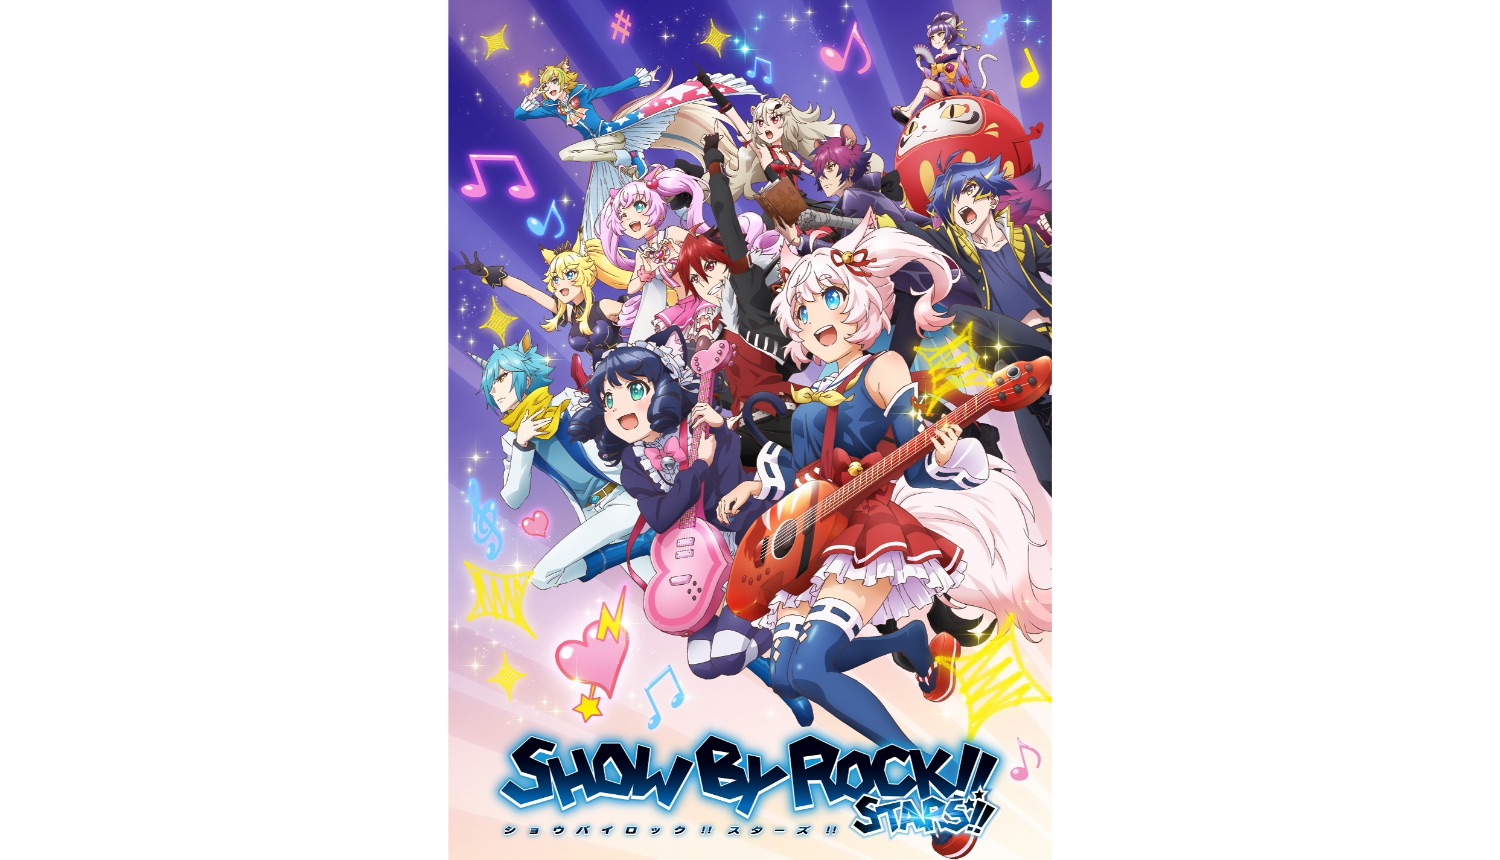 TV Anime Show By Rock!! Mashumairesh!! Original Soundtrack